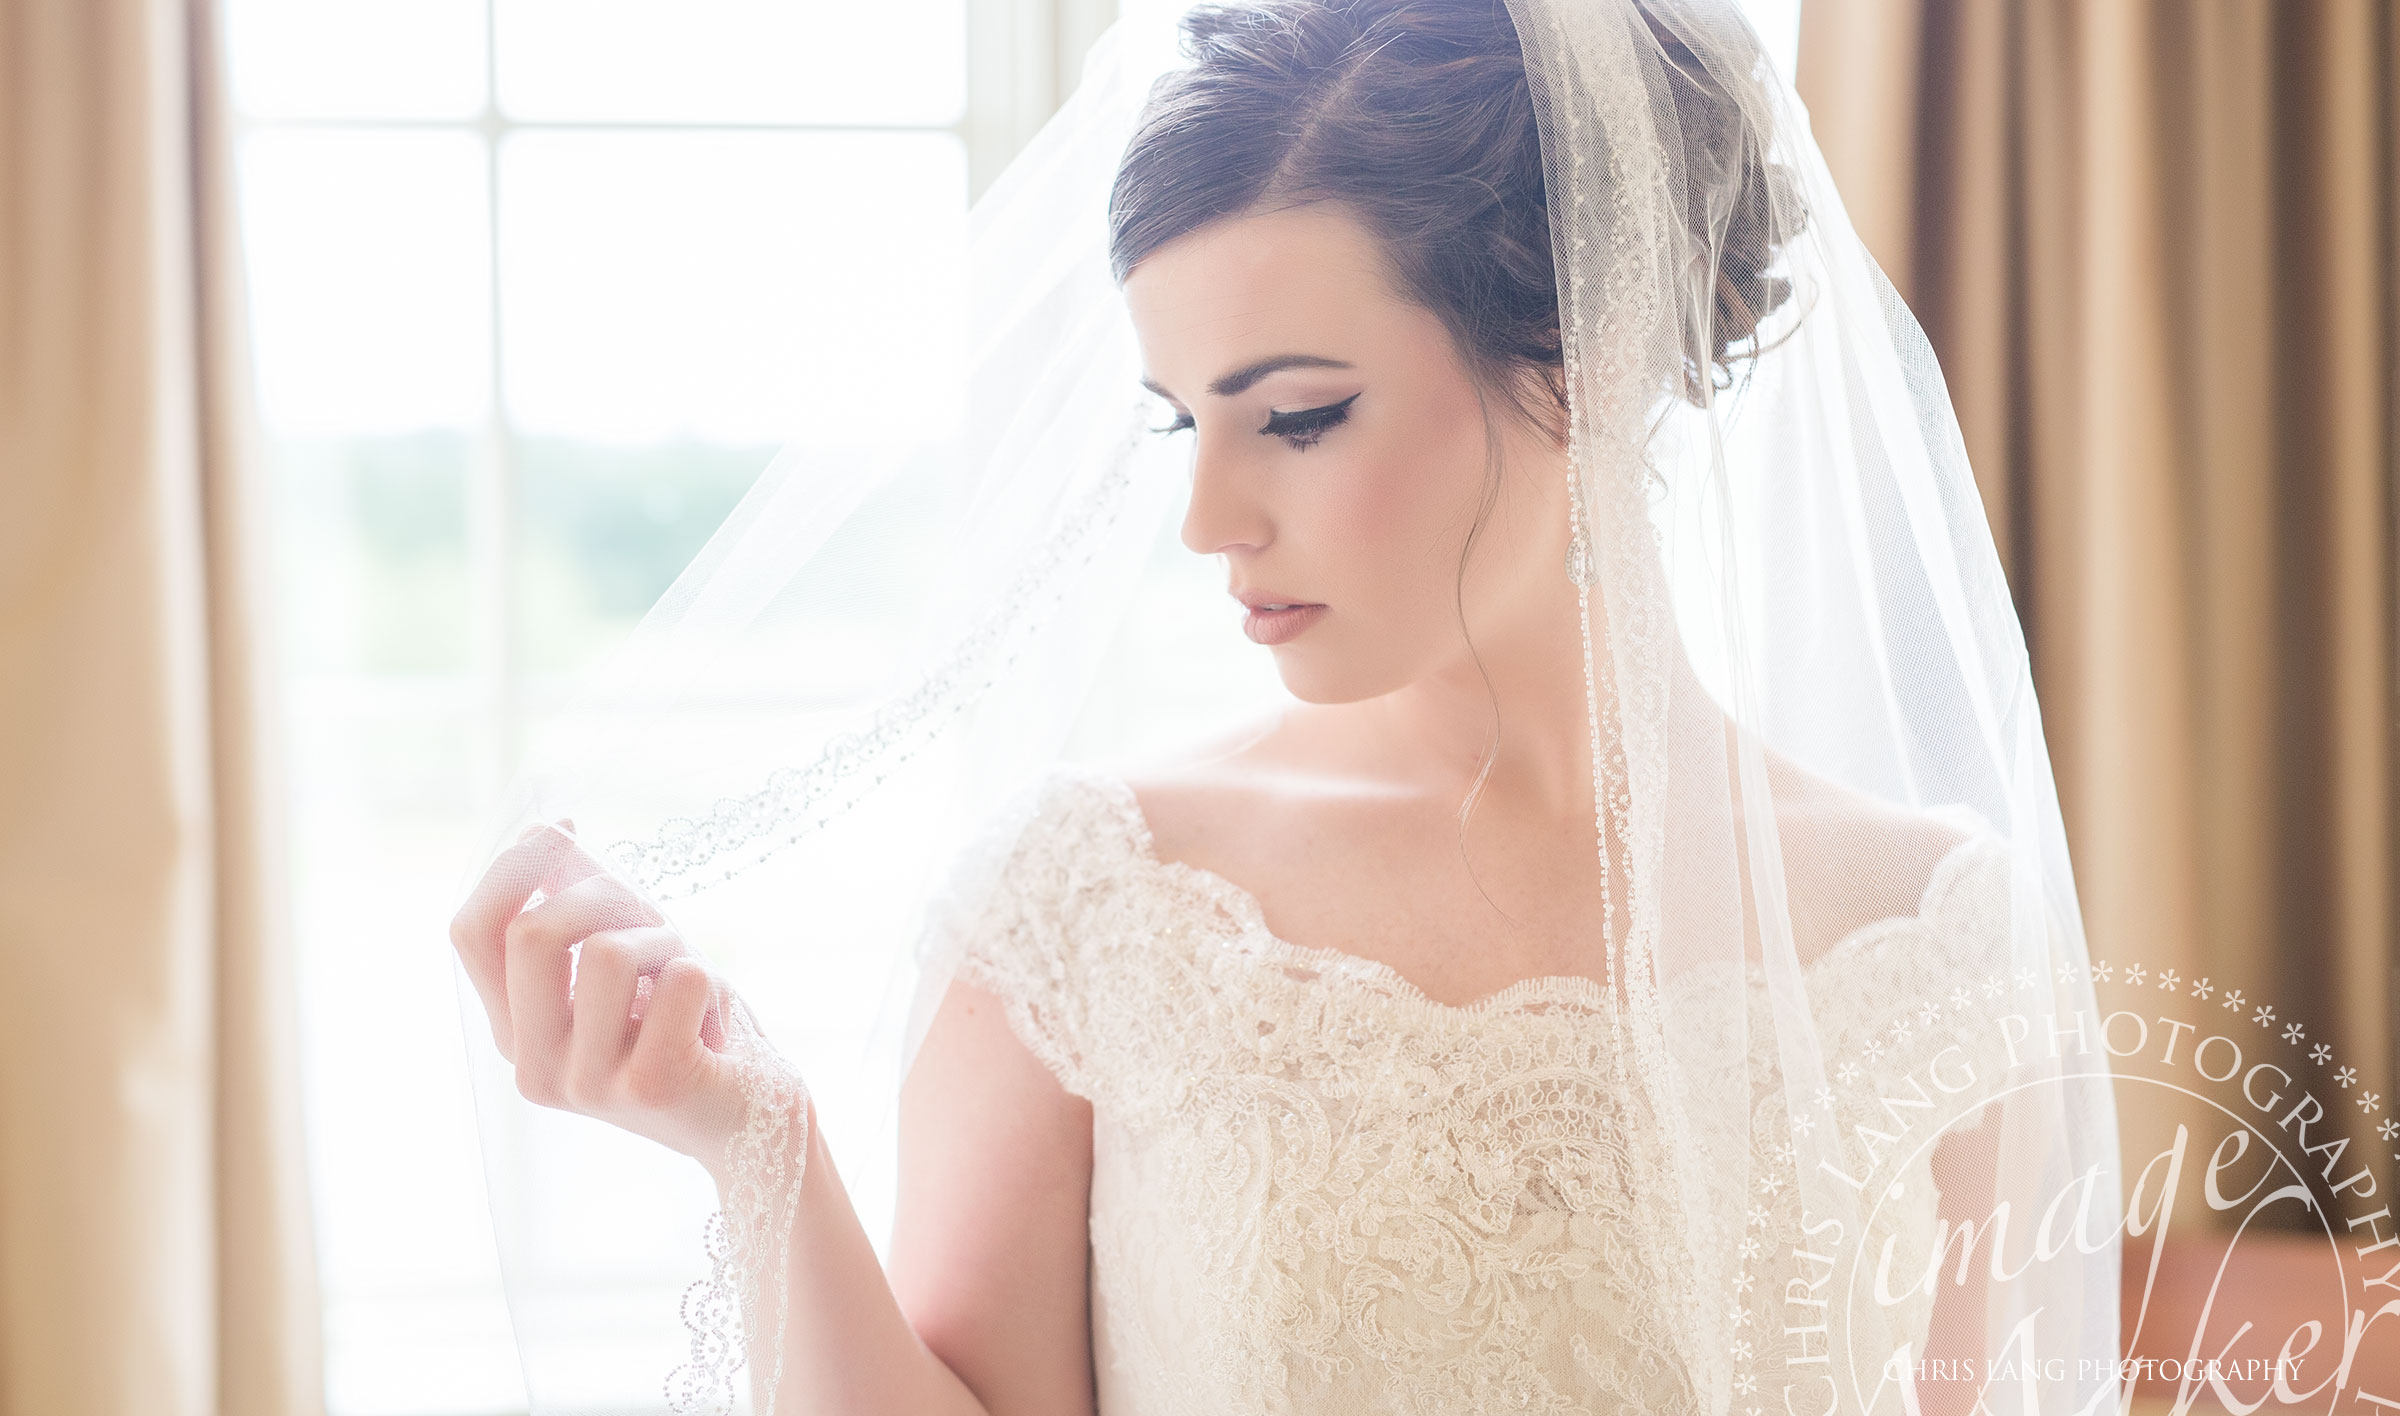 Bridal Photography, Bridal Portraits, Bridals, Wedding Dress, Wedding Gown, Bridal Session, Bridal Trends, Bridal Ideas, NC Bridal Photographers